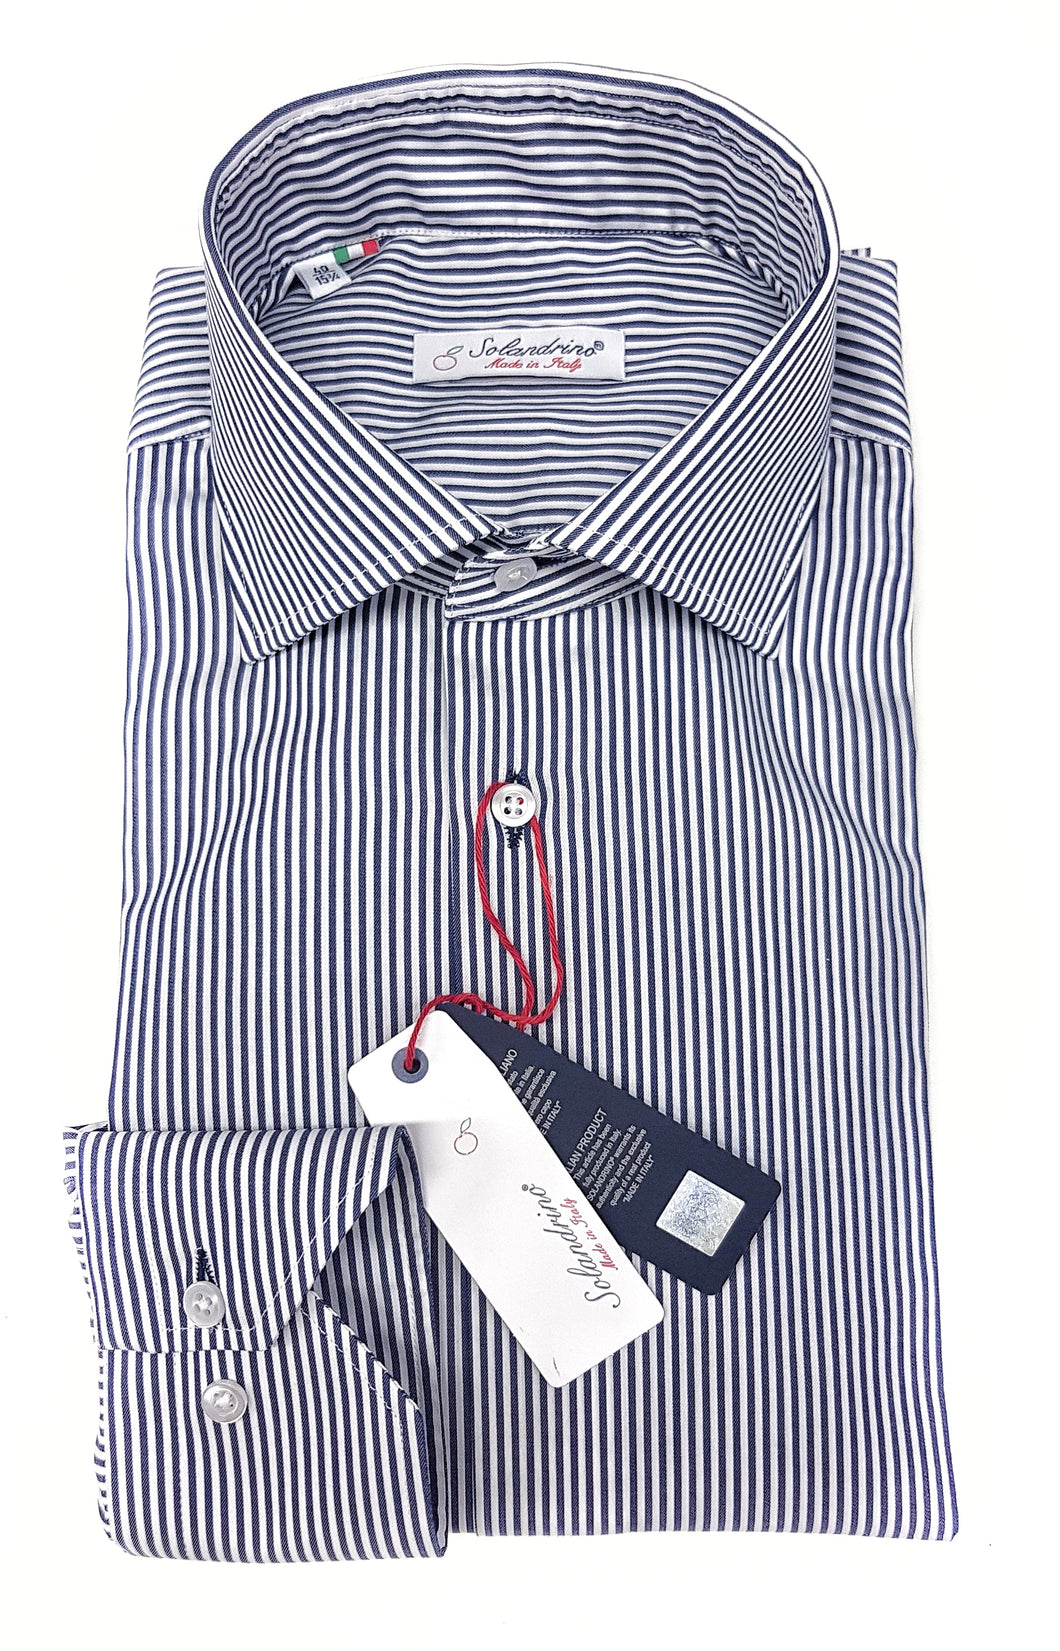 Camicia Uomo puro cotone a righe blu alta qualità made in italy men shirt blue stripe  high quality